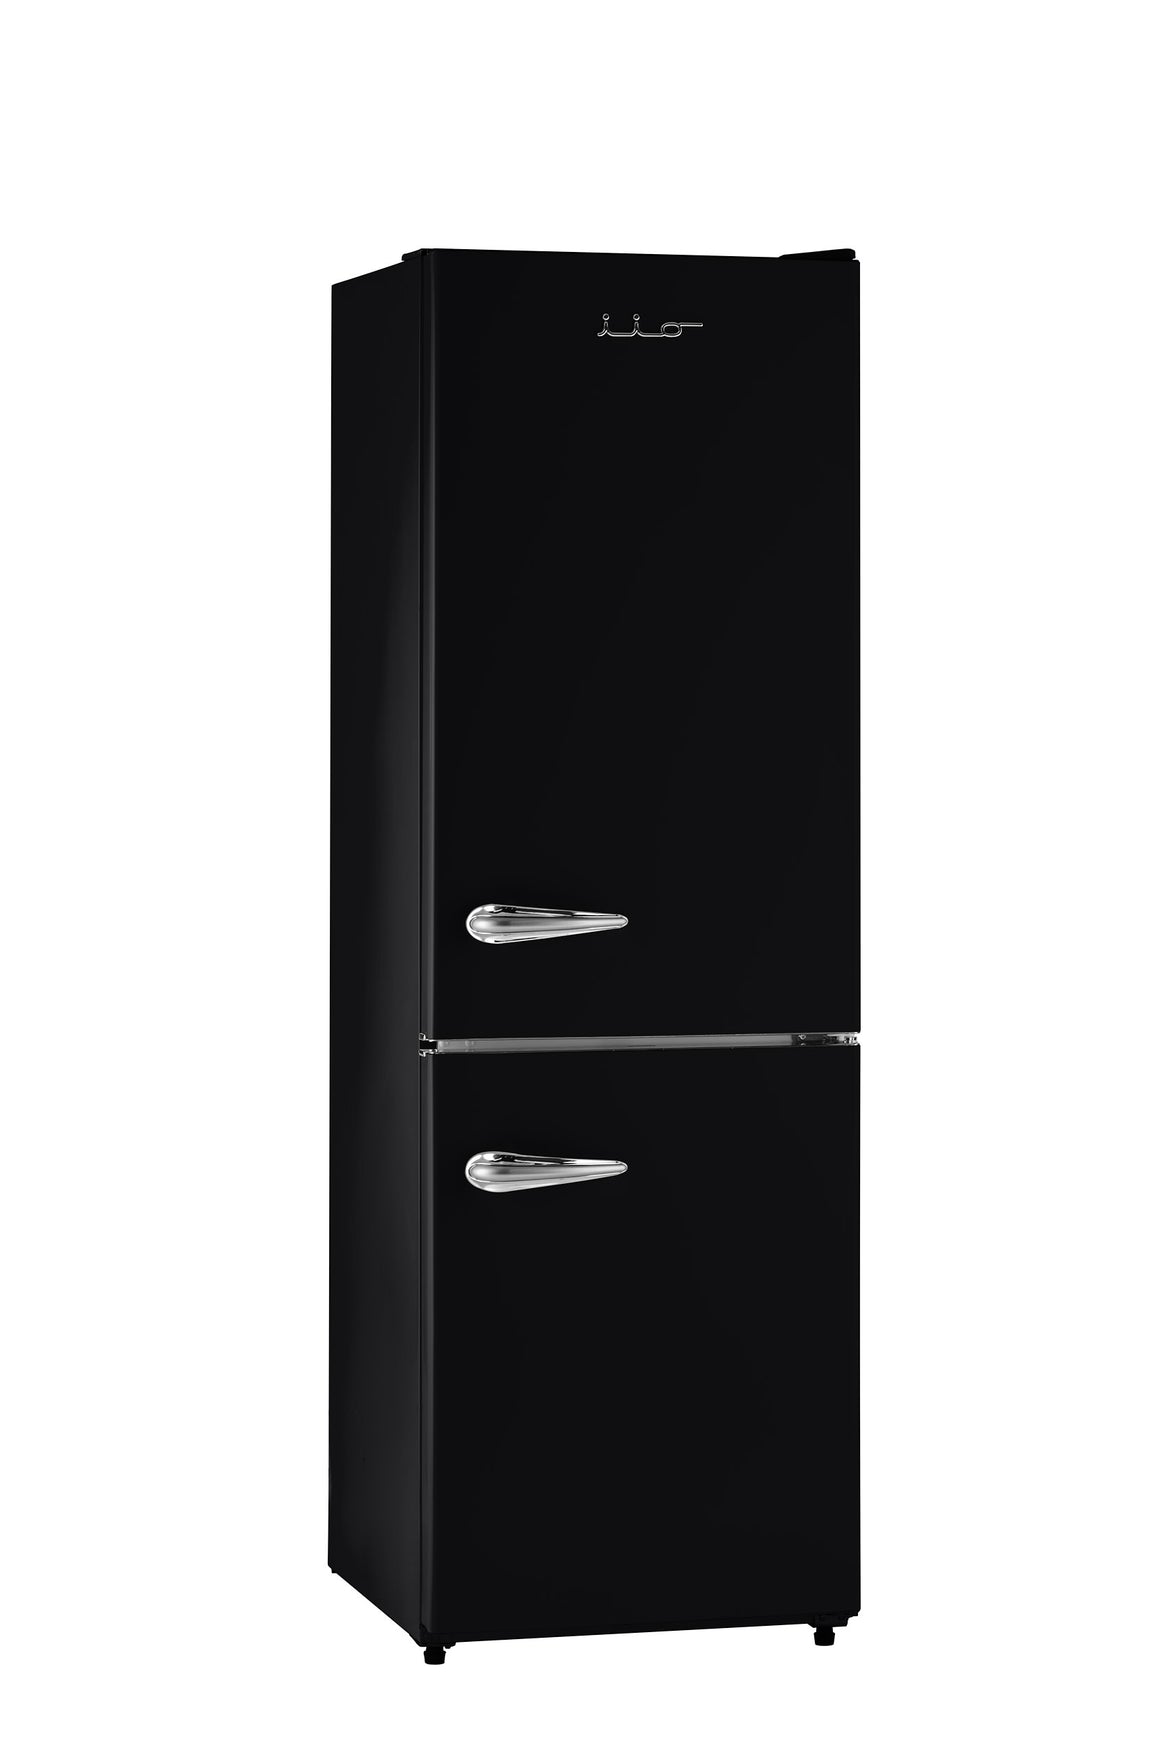 iio 11 Cu. Ft. Retro Refrigerator with Bottom Freezer in Black (Right Hinge)